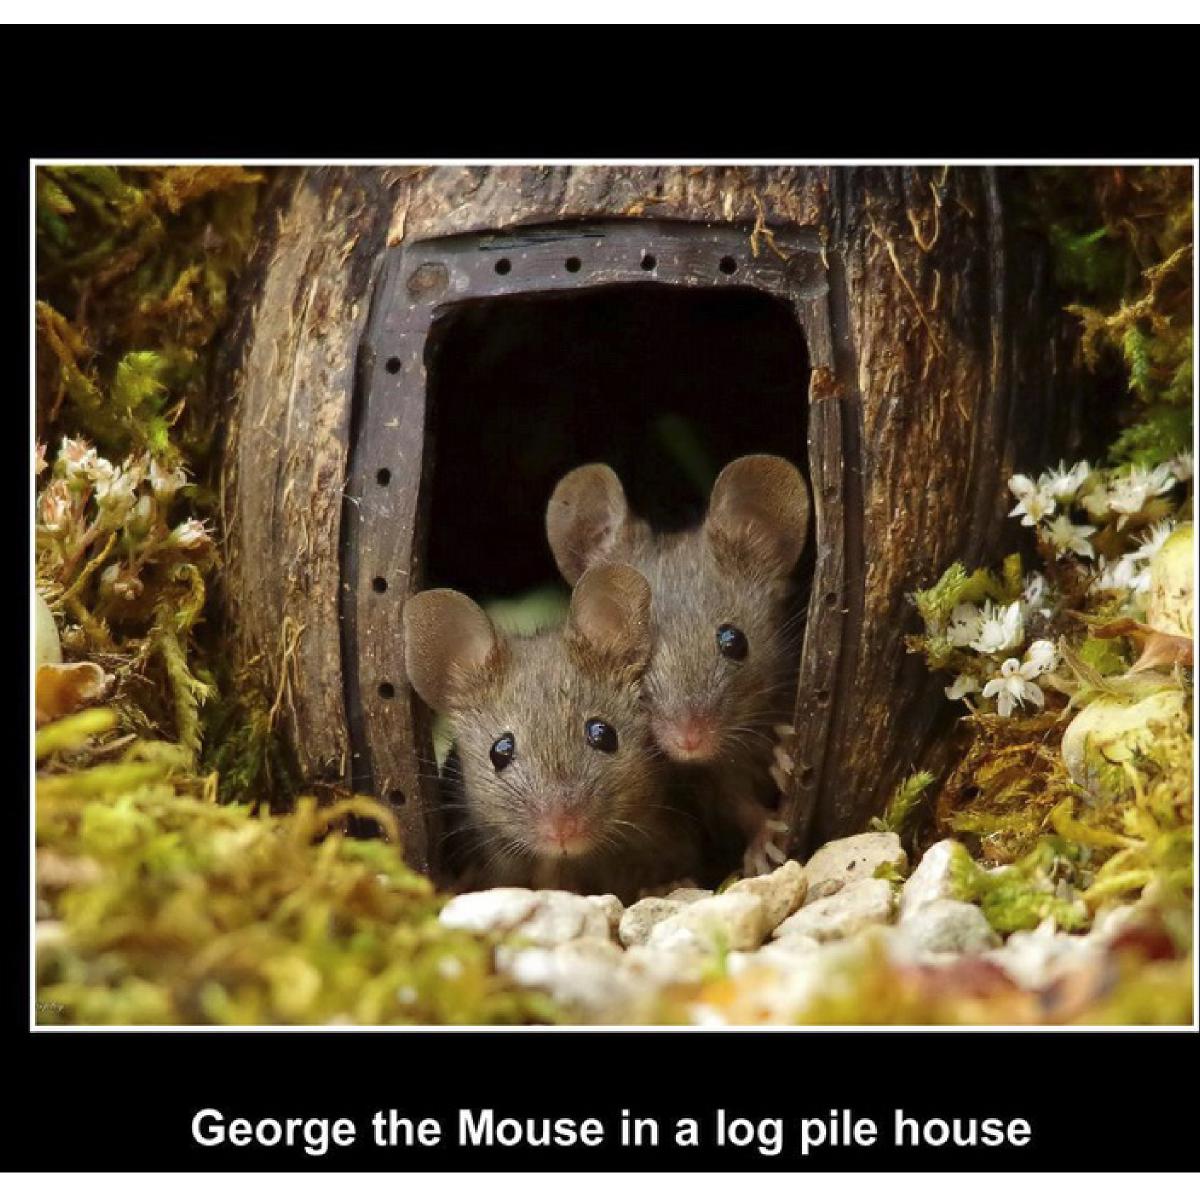 usa George the mouse story calendar